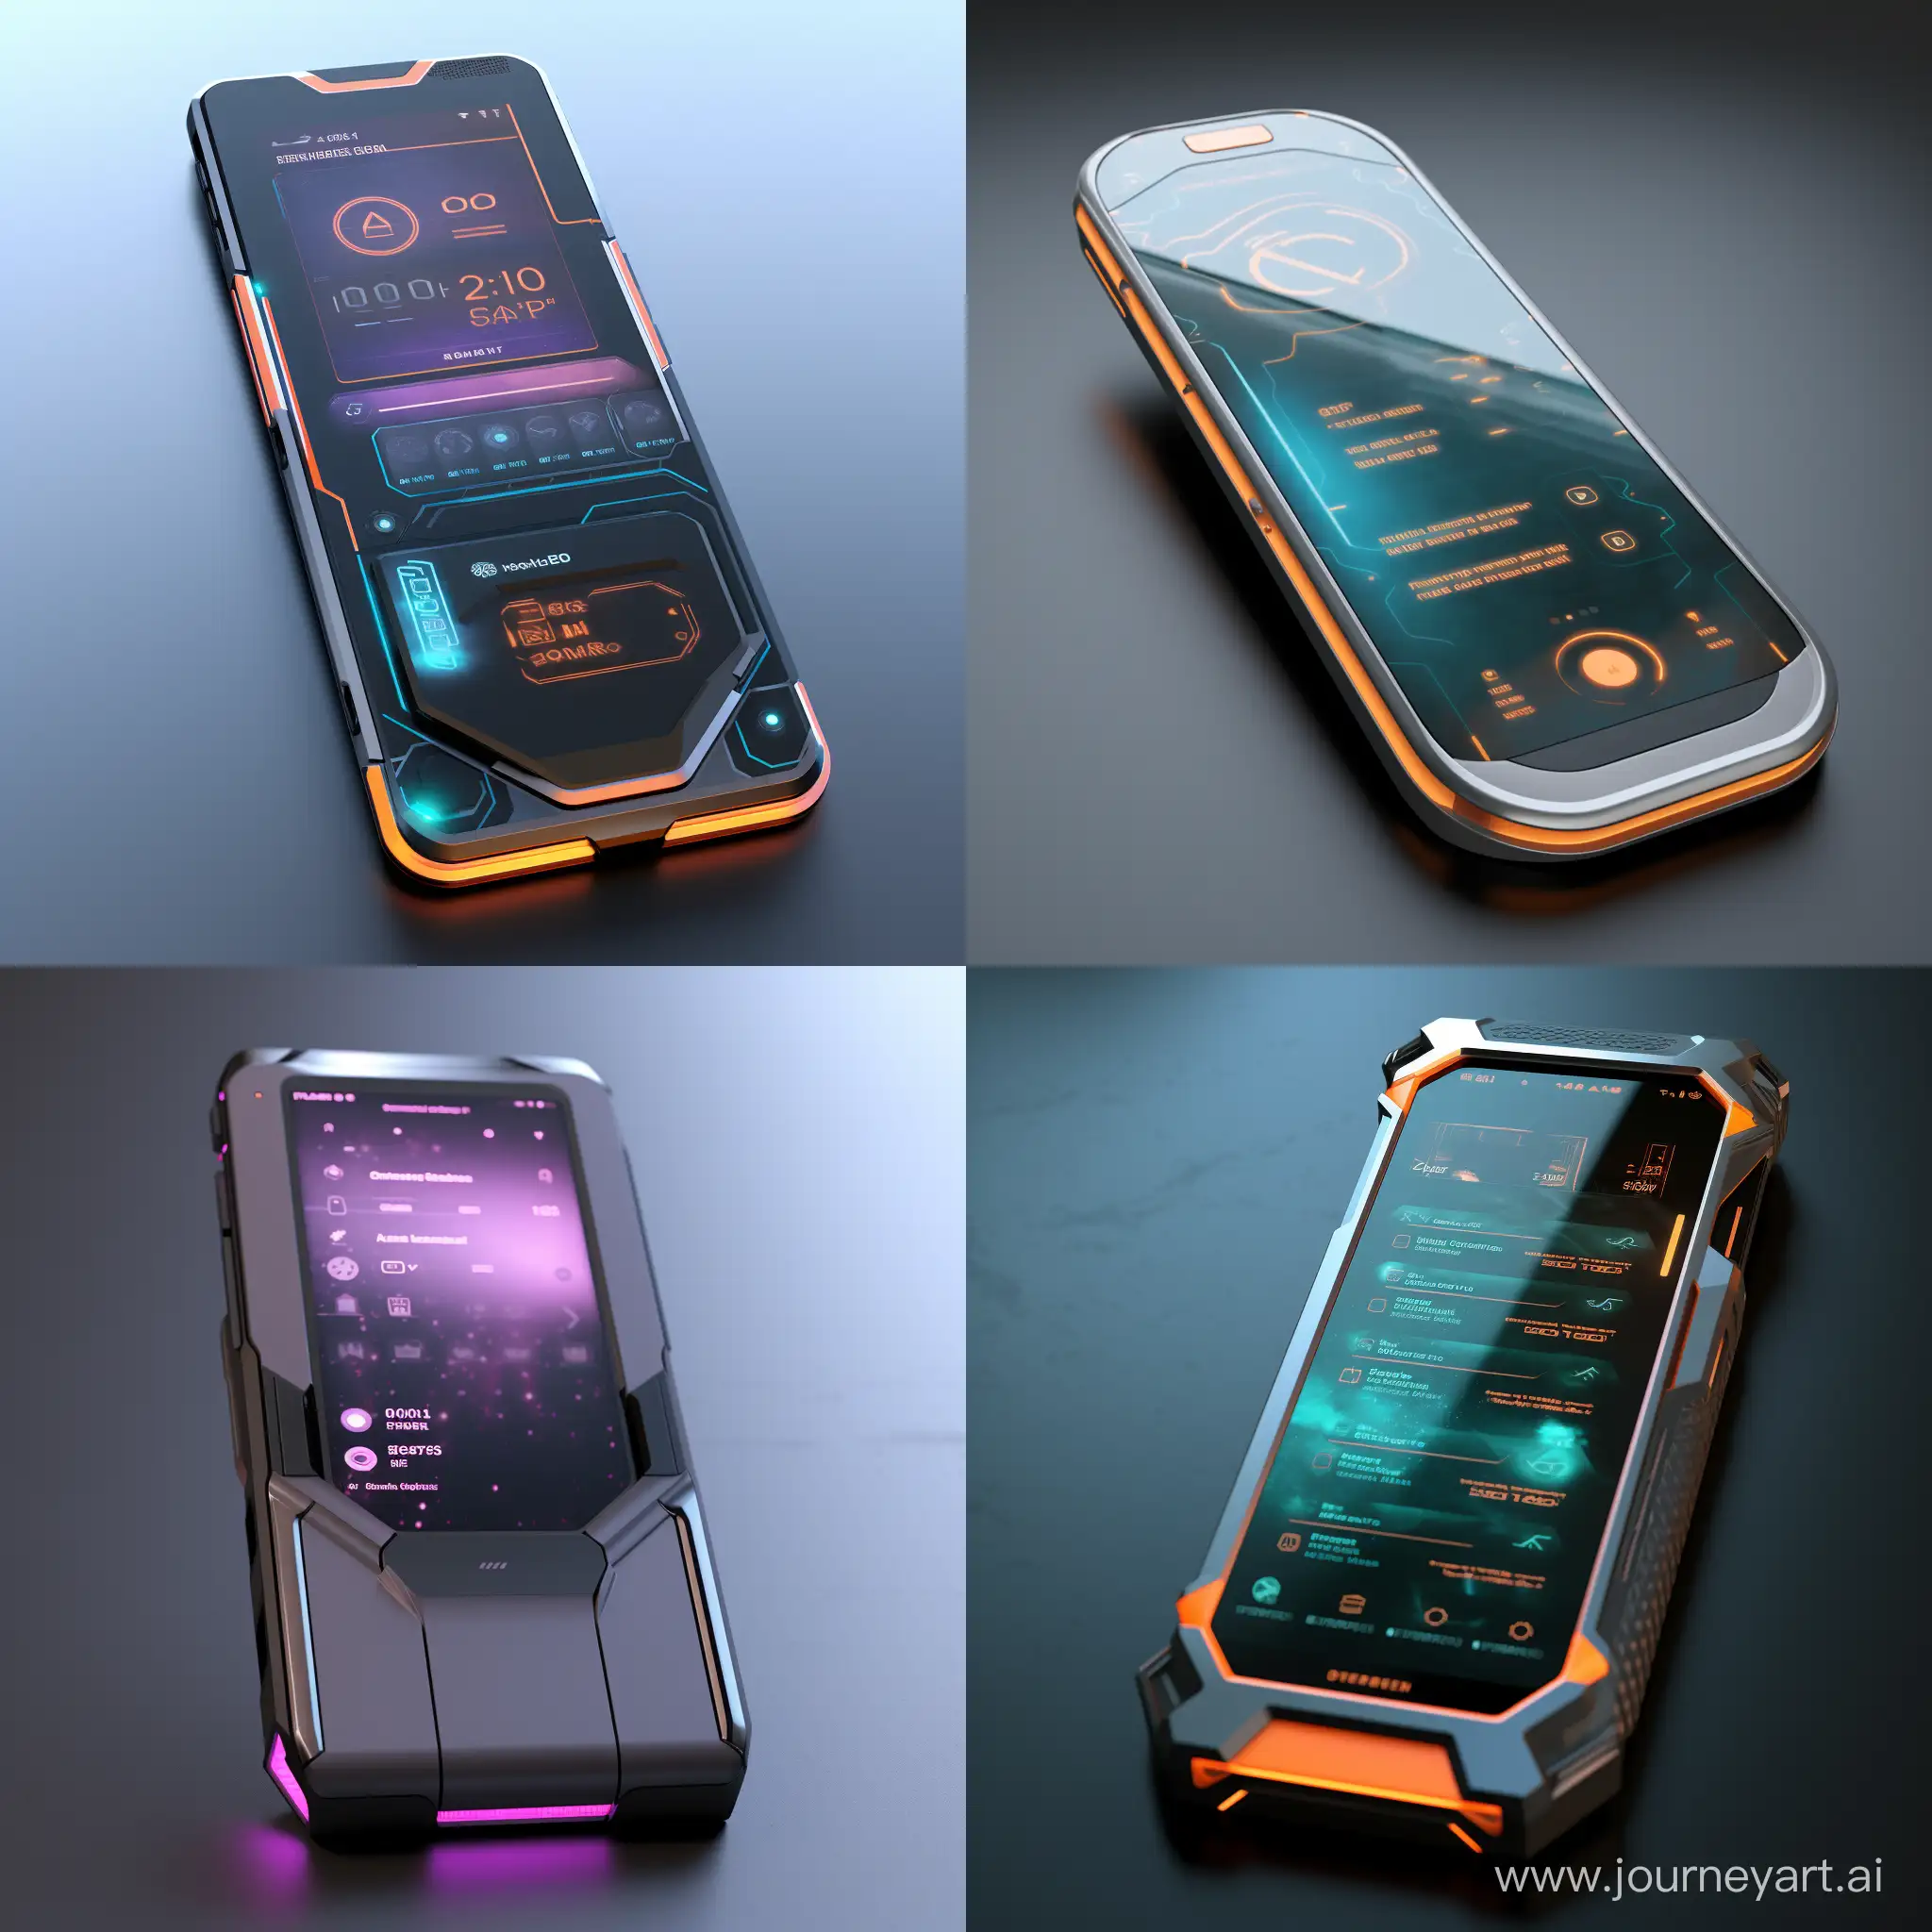 Futuristic-Smartphone-Concept-in-11-Aspect-Ratio-Cuttingedge-Technology-Unveiled